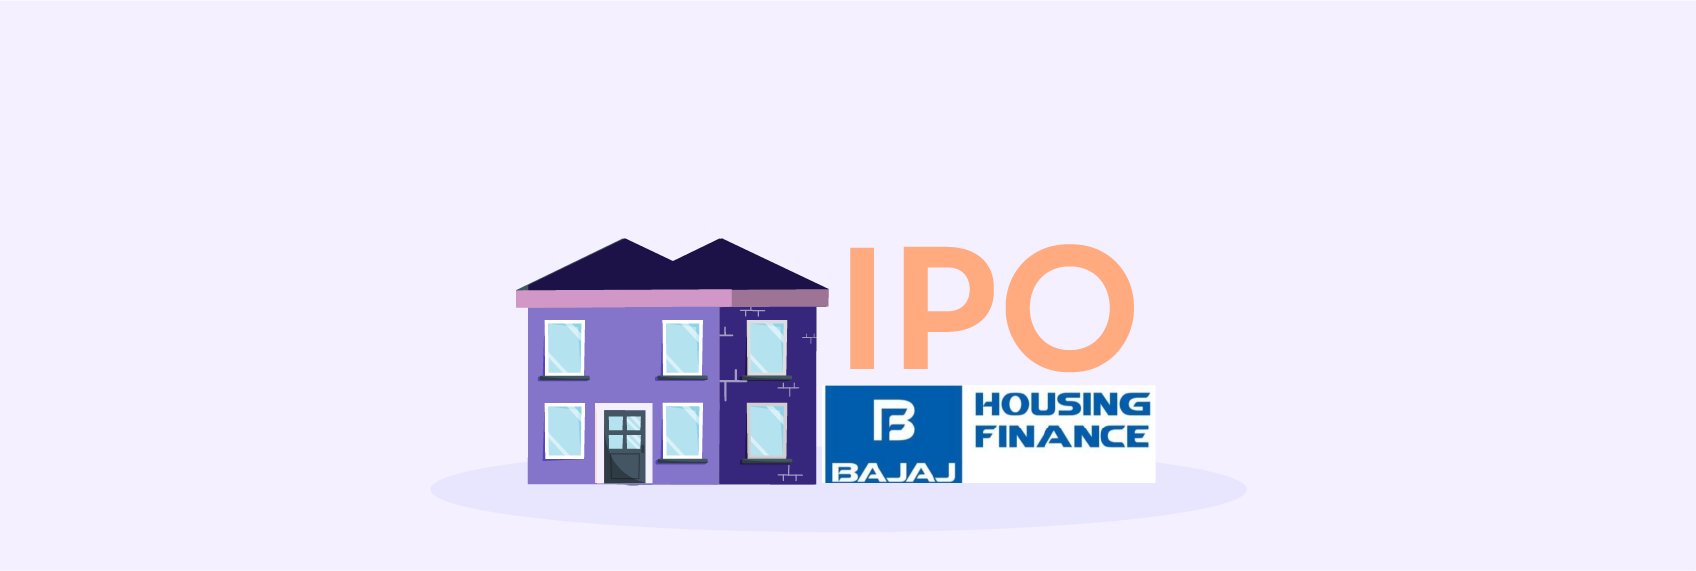 Bajaj Housing Finance Rs 4000 Cr IPO Approved